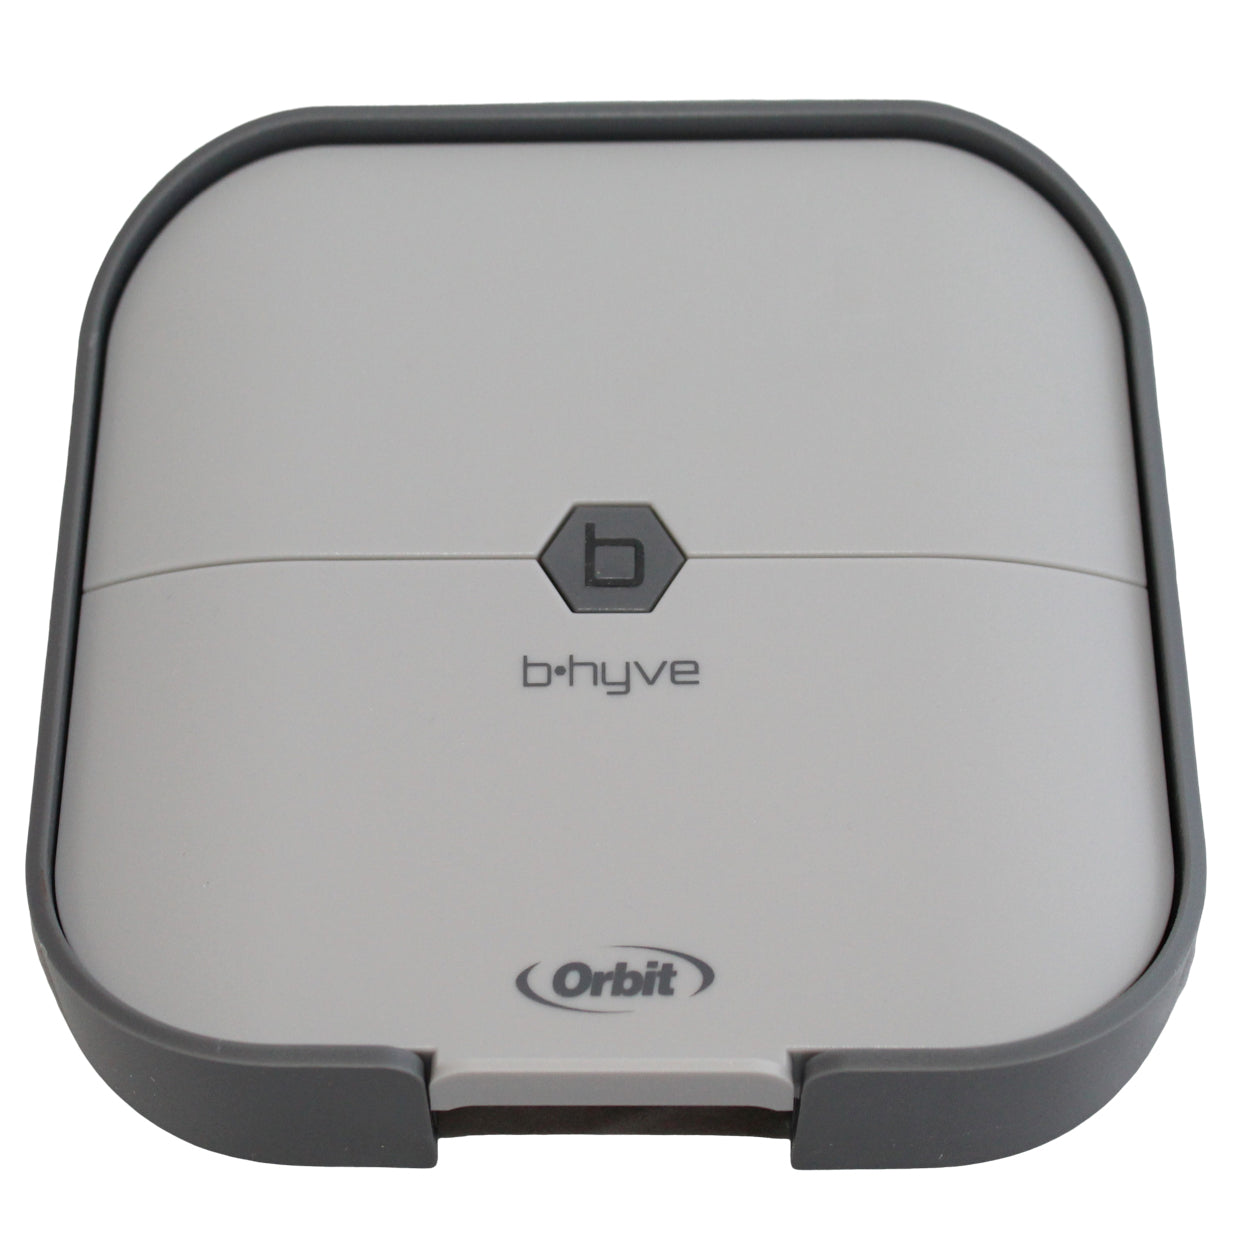 Orbit Control de Riego WiFi 6 Zonas Controlado desde Smartphone B-Hyve